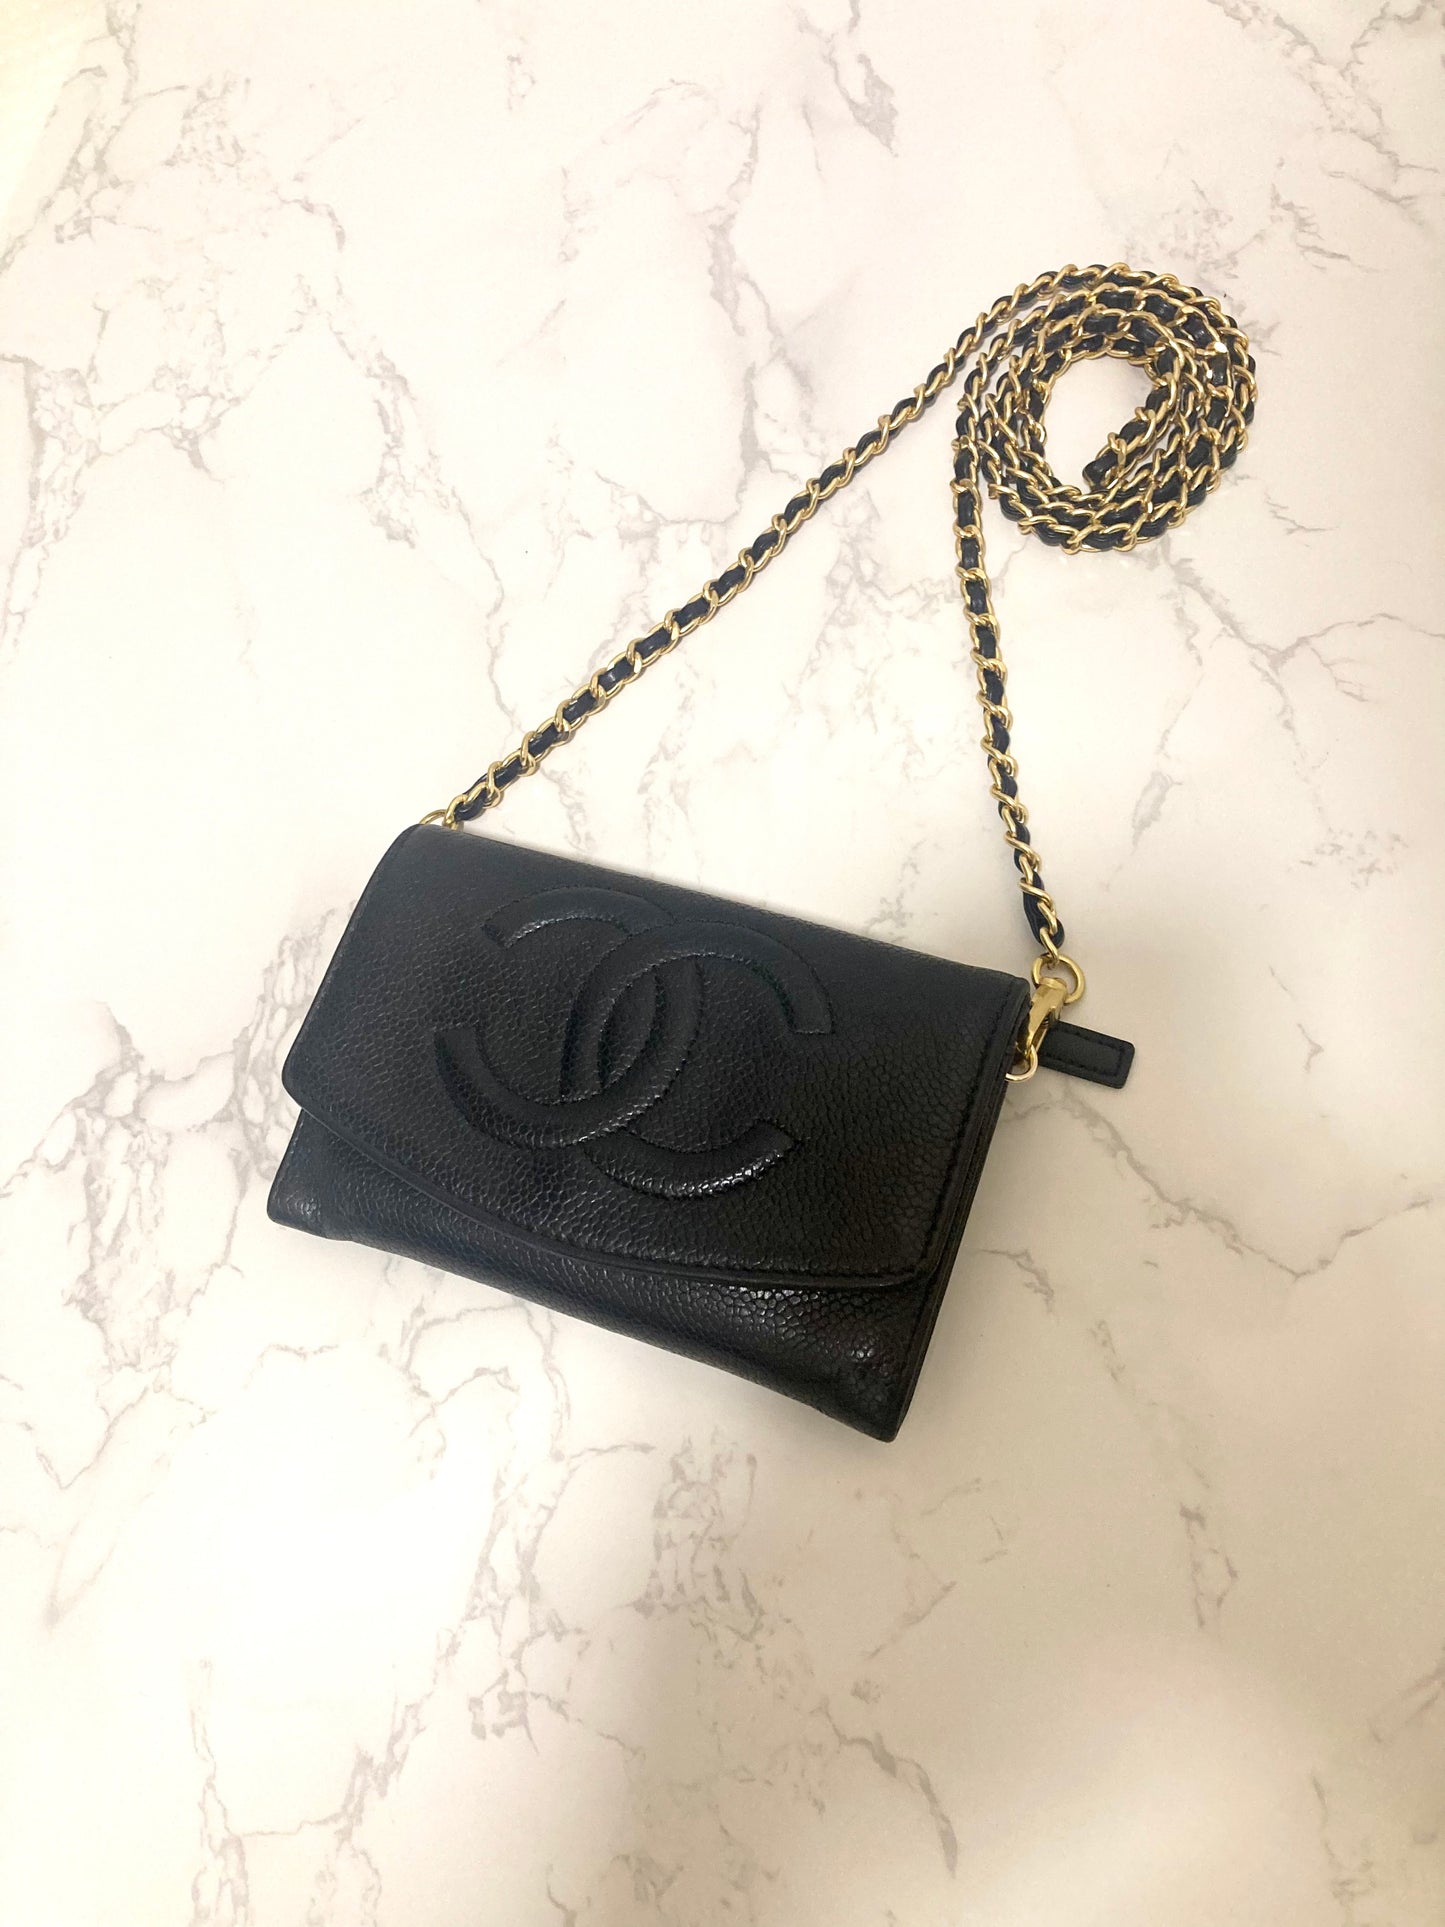 CHANEL Black Caviar Leather Chain Shoulder Bag (Add-on)